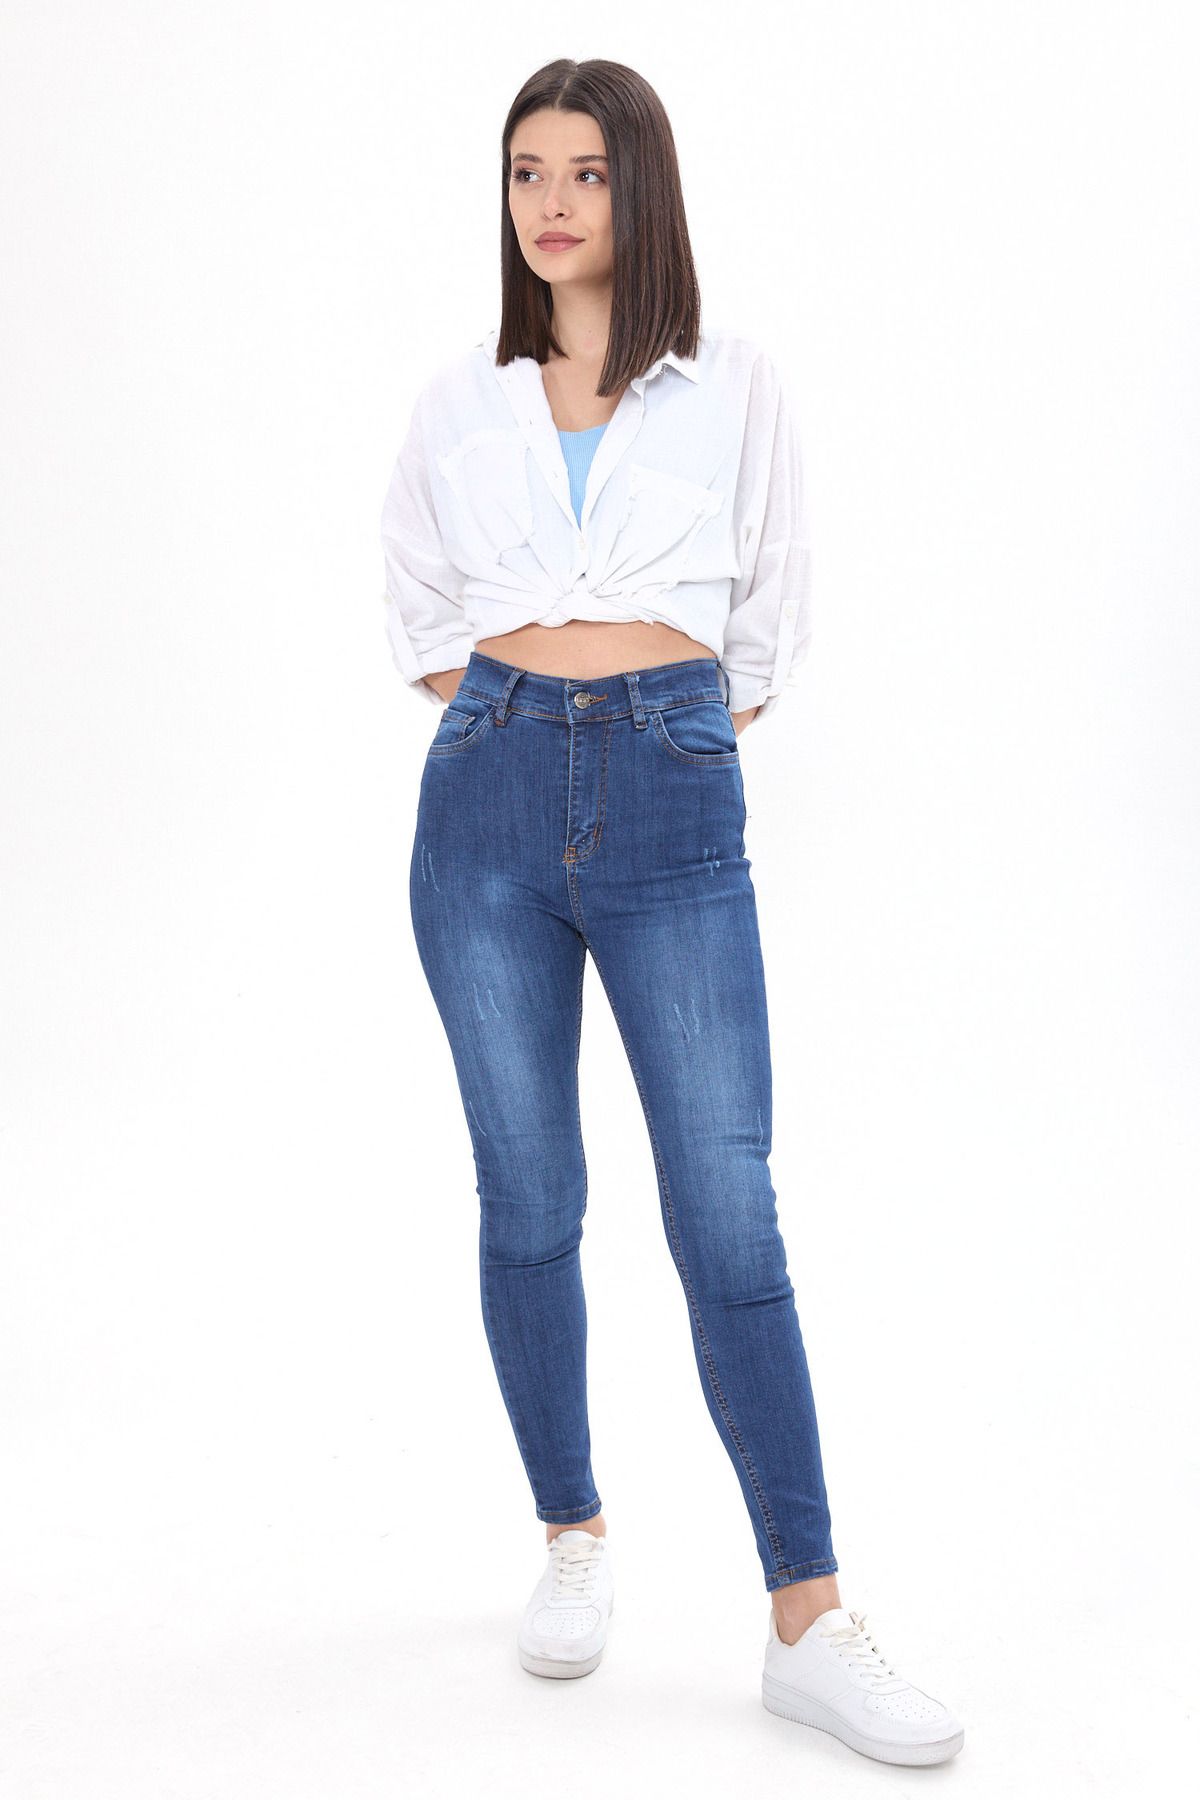 TOFİSA Düz Orta Kadın Mavi Kot Pantolon - 23995